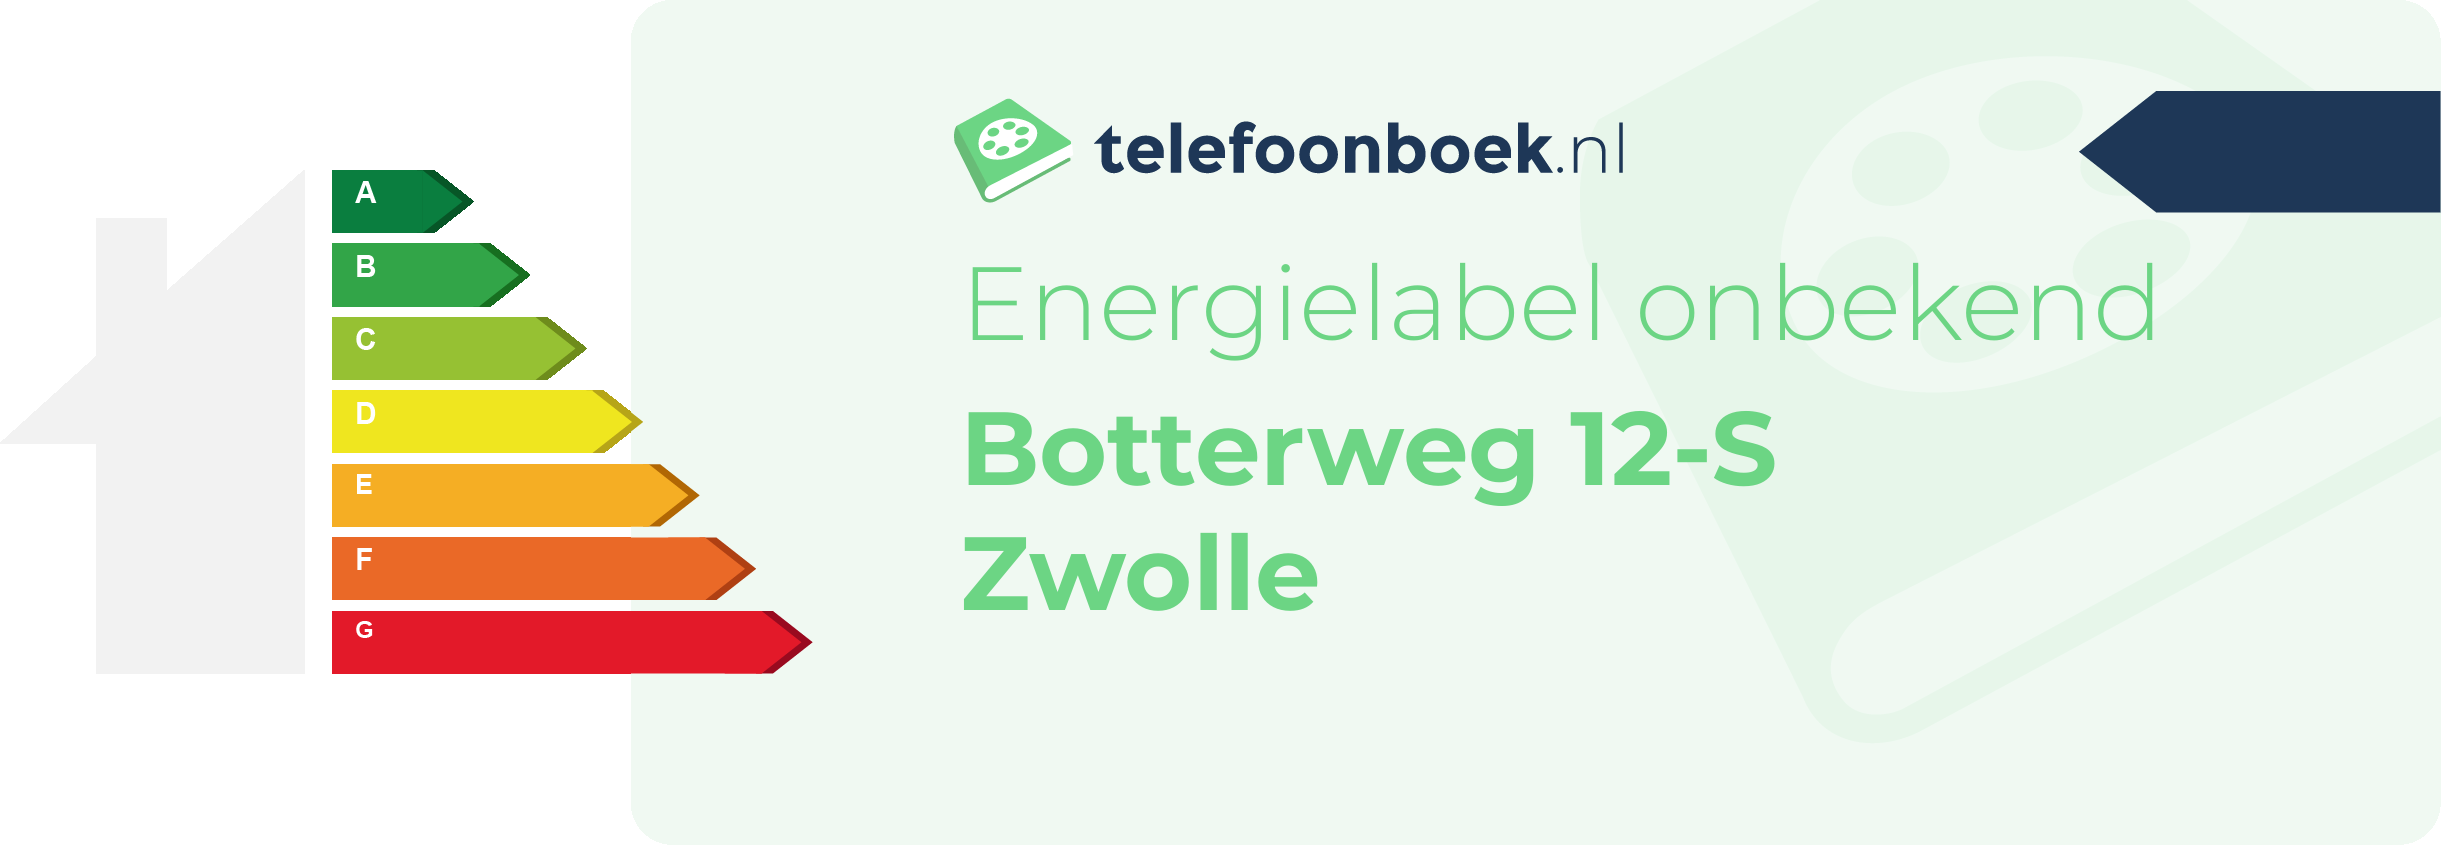 Energielabel Botterweg 12-S Zwolle